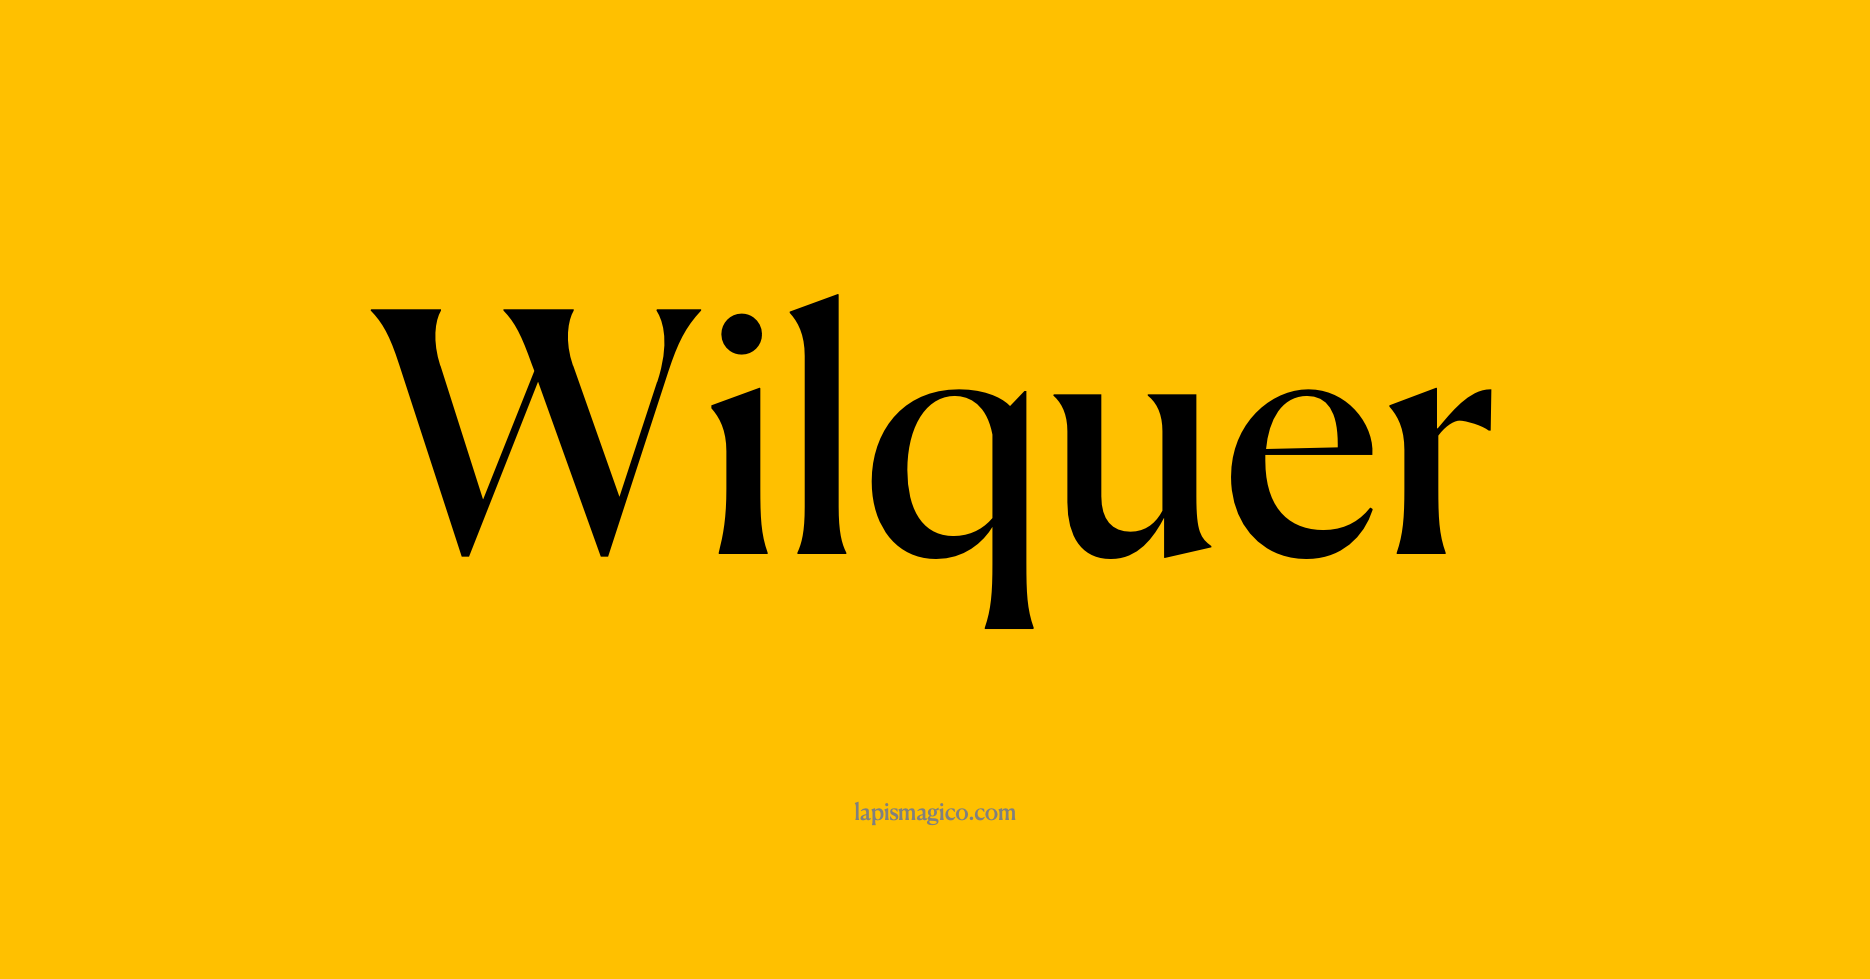 Nome Wilquer